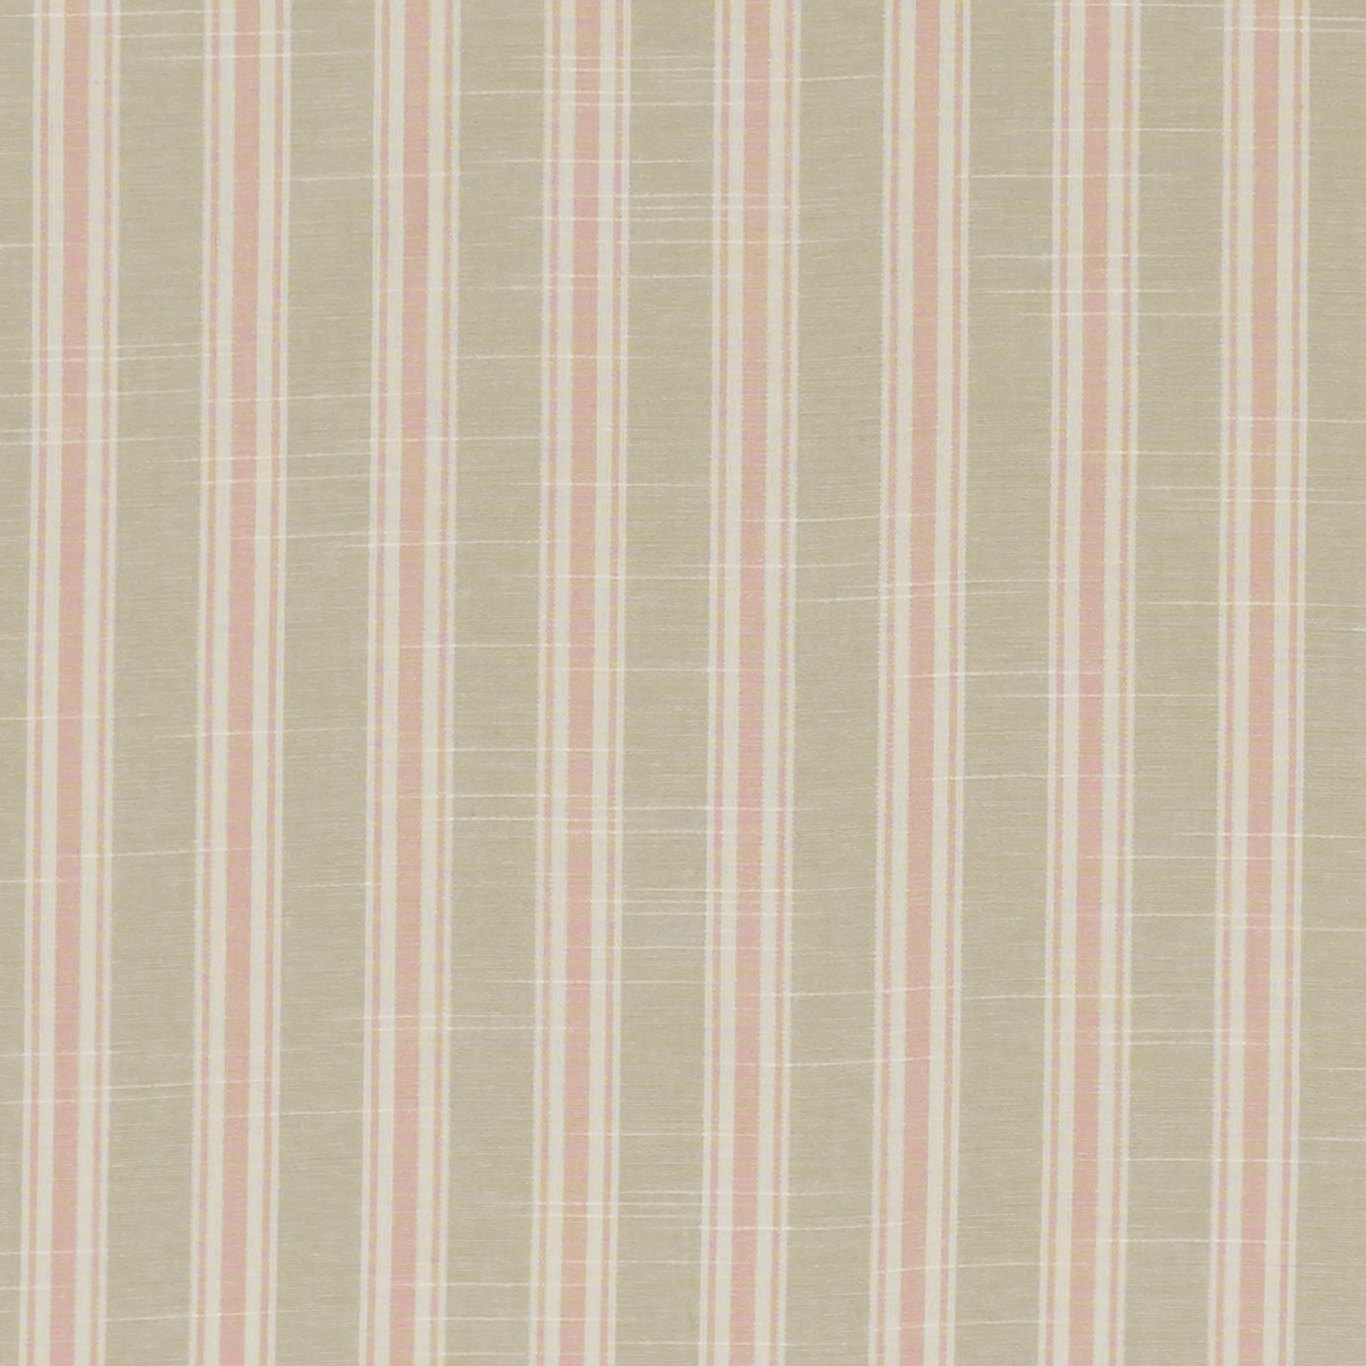 Thornwick Blush Fabric by STG